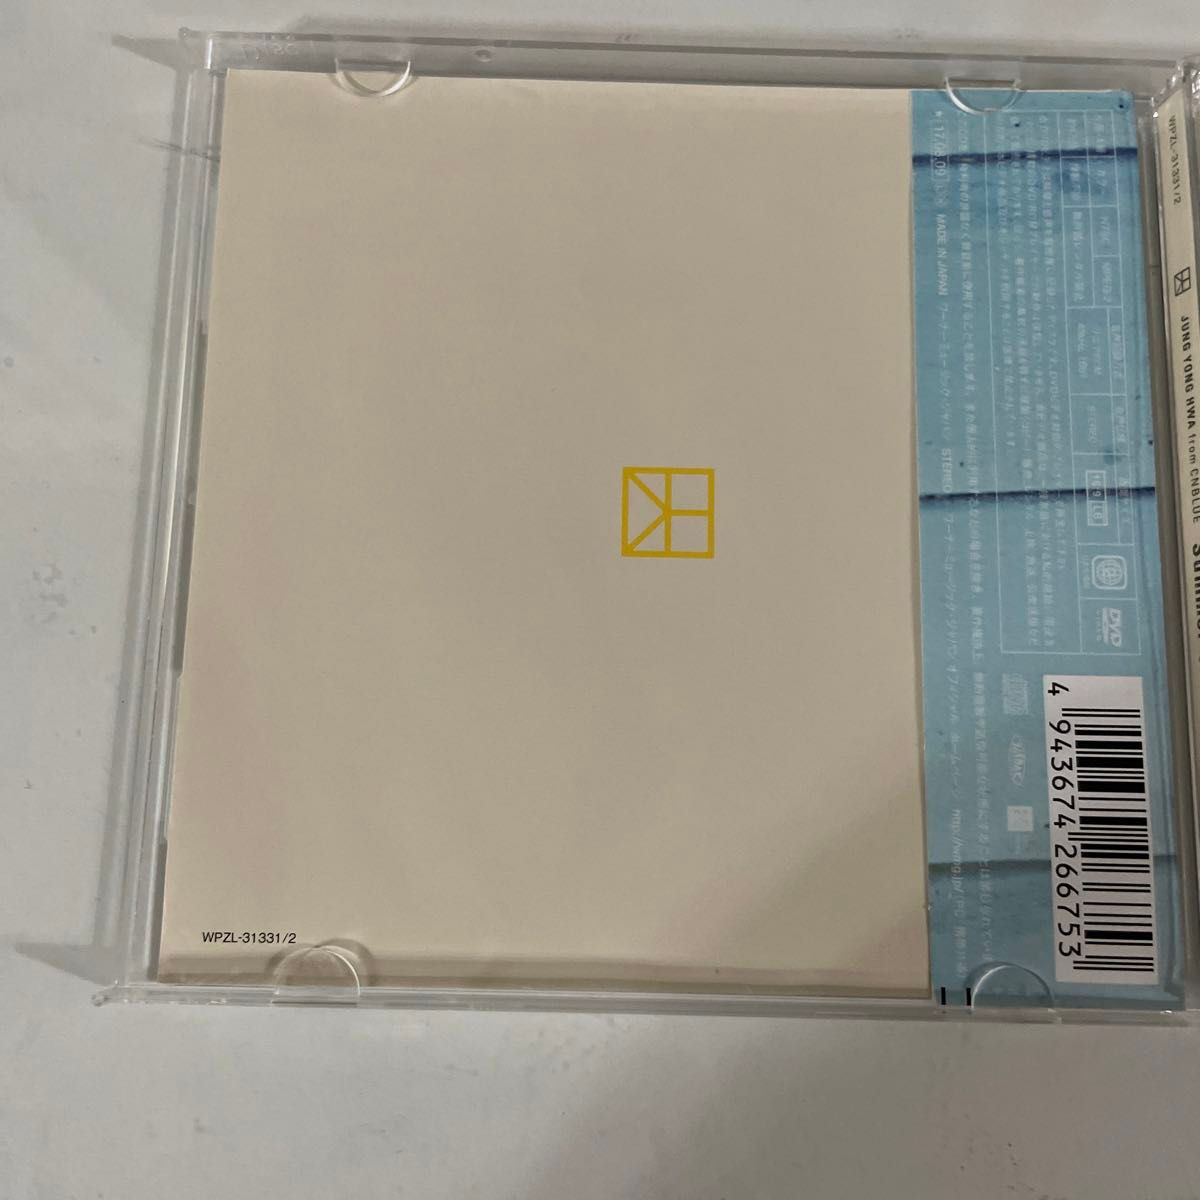 Summer Calling (初回限定盤) CD+DVD